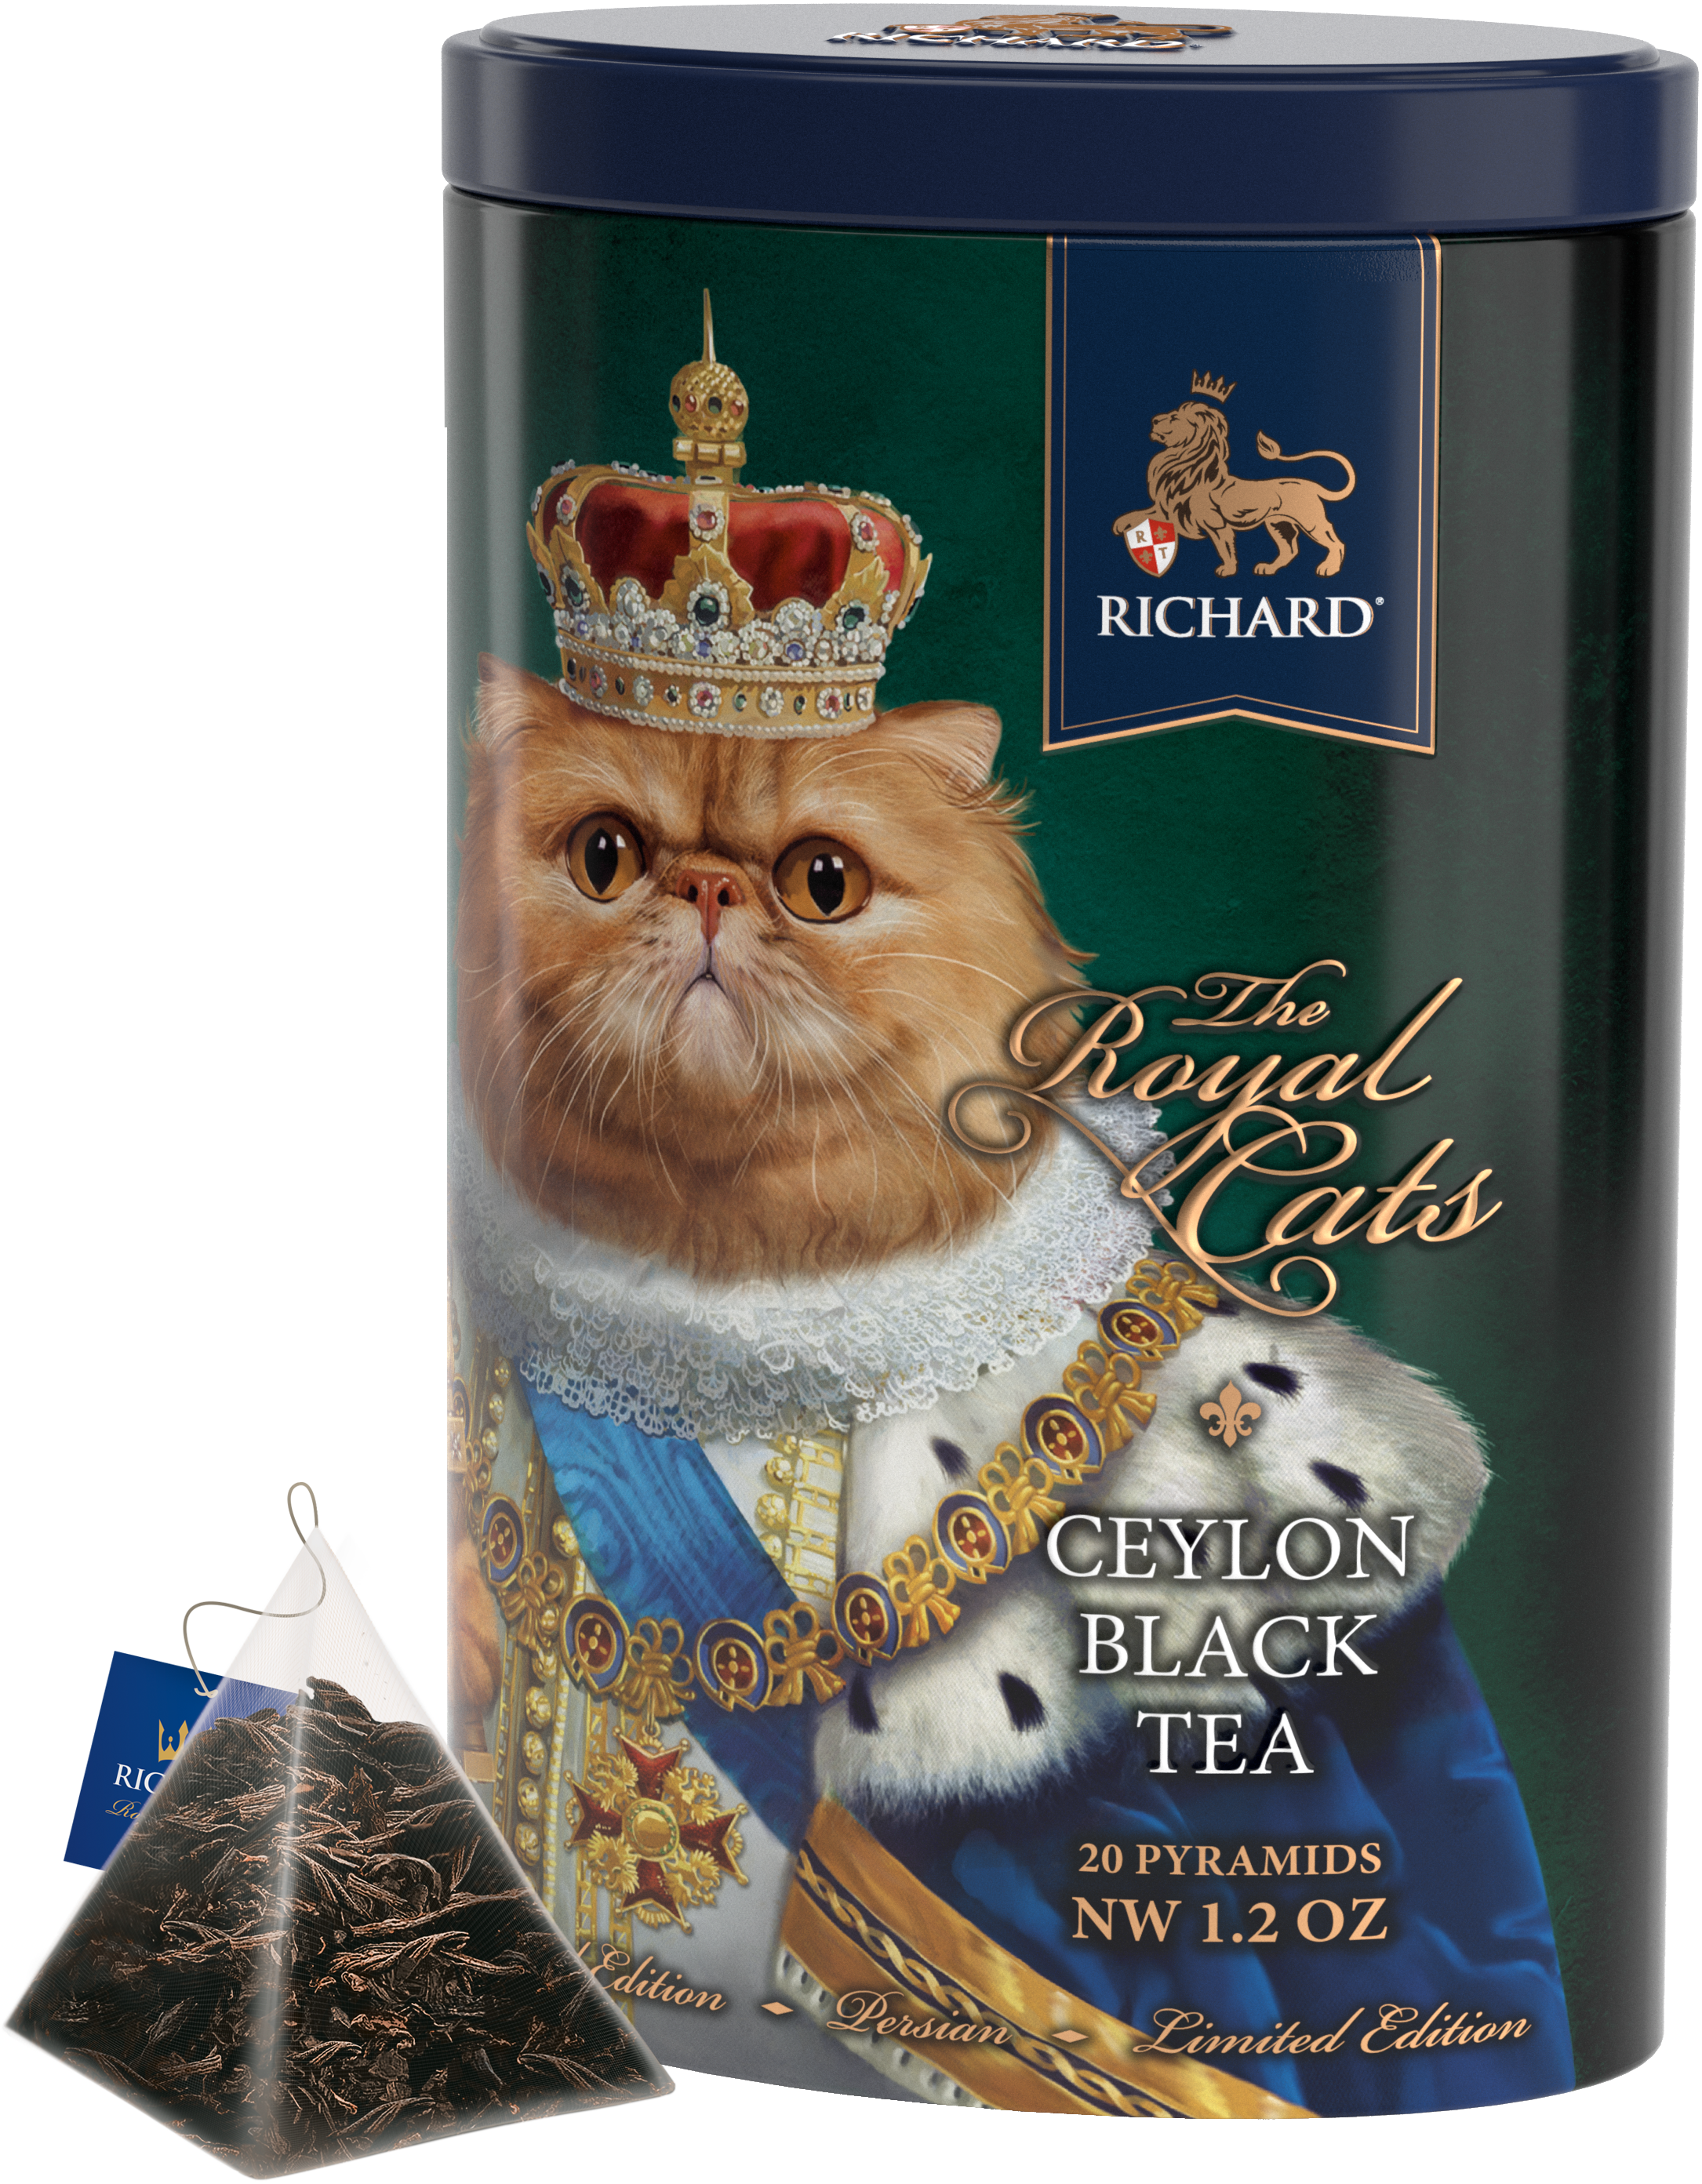 Richard tea "Royal Cats. Persian", classic black tea in pyramids, 20 pyramids, 34g